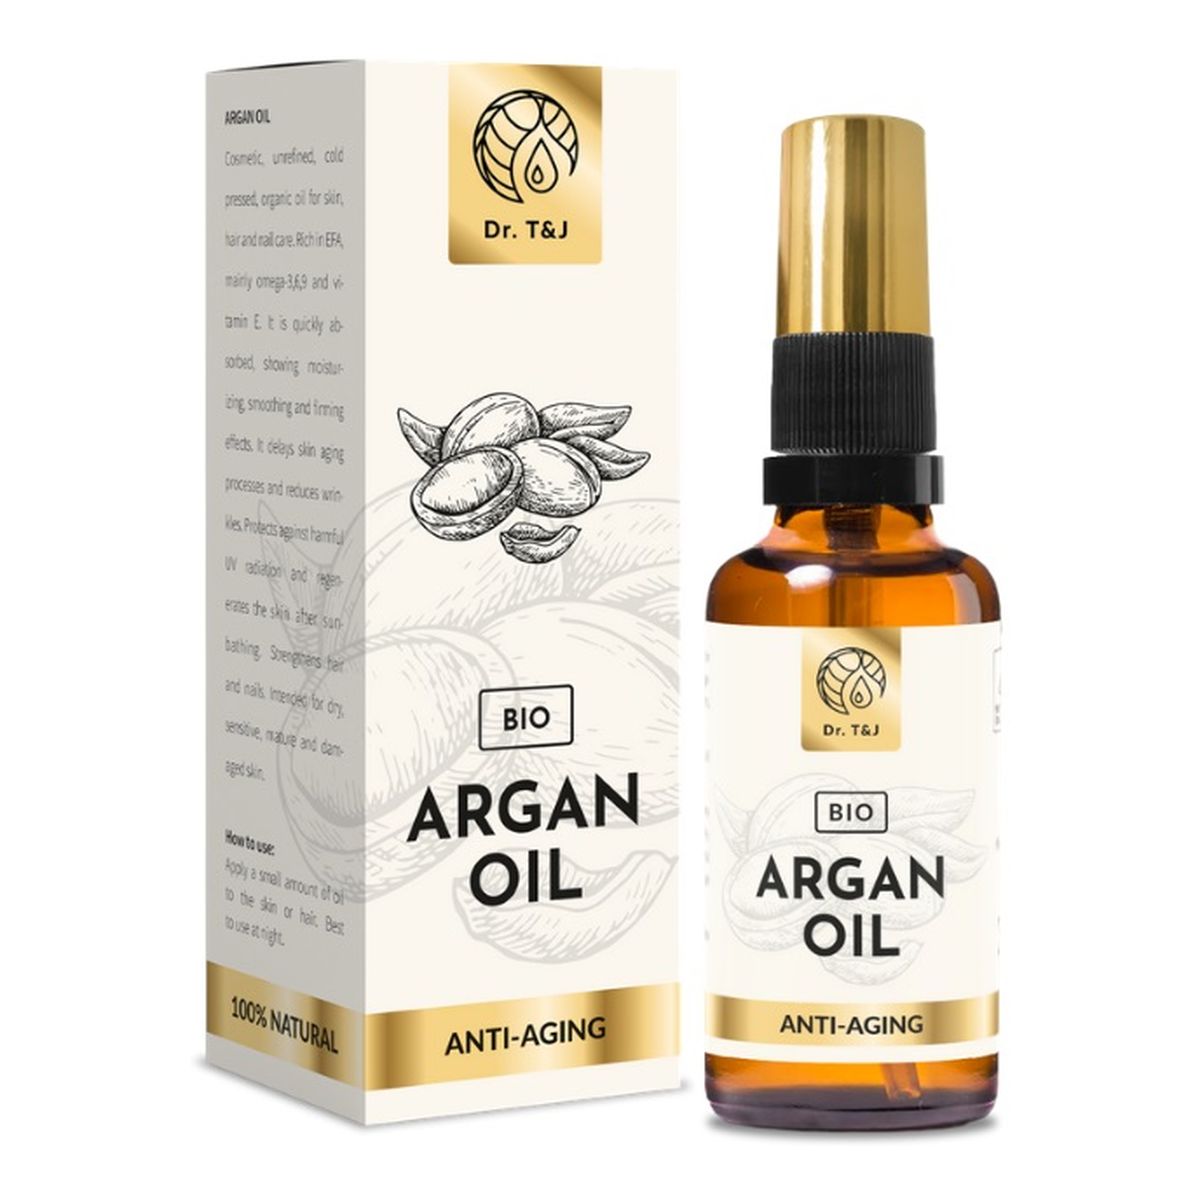 Dr. T&J Argan Oil naturalny olej arganowy BIO 50ml